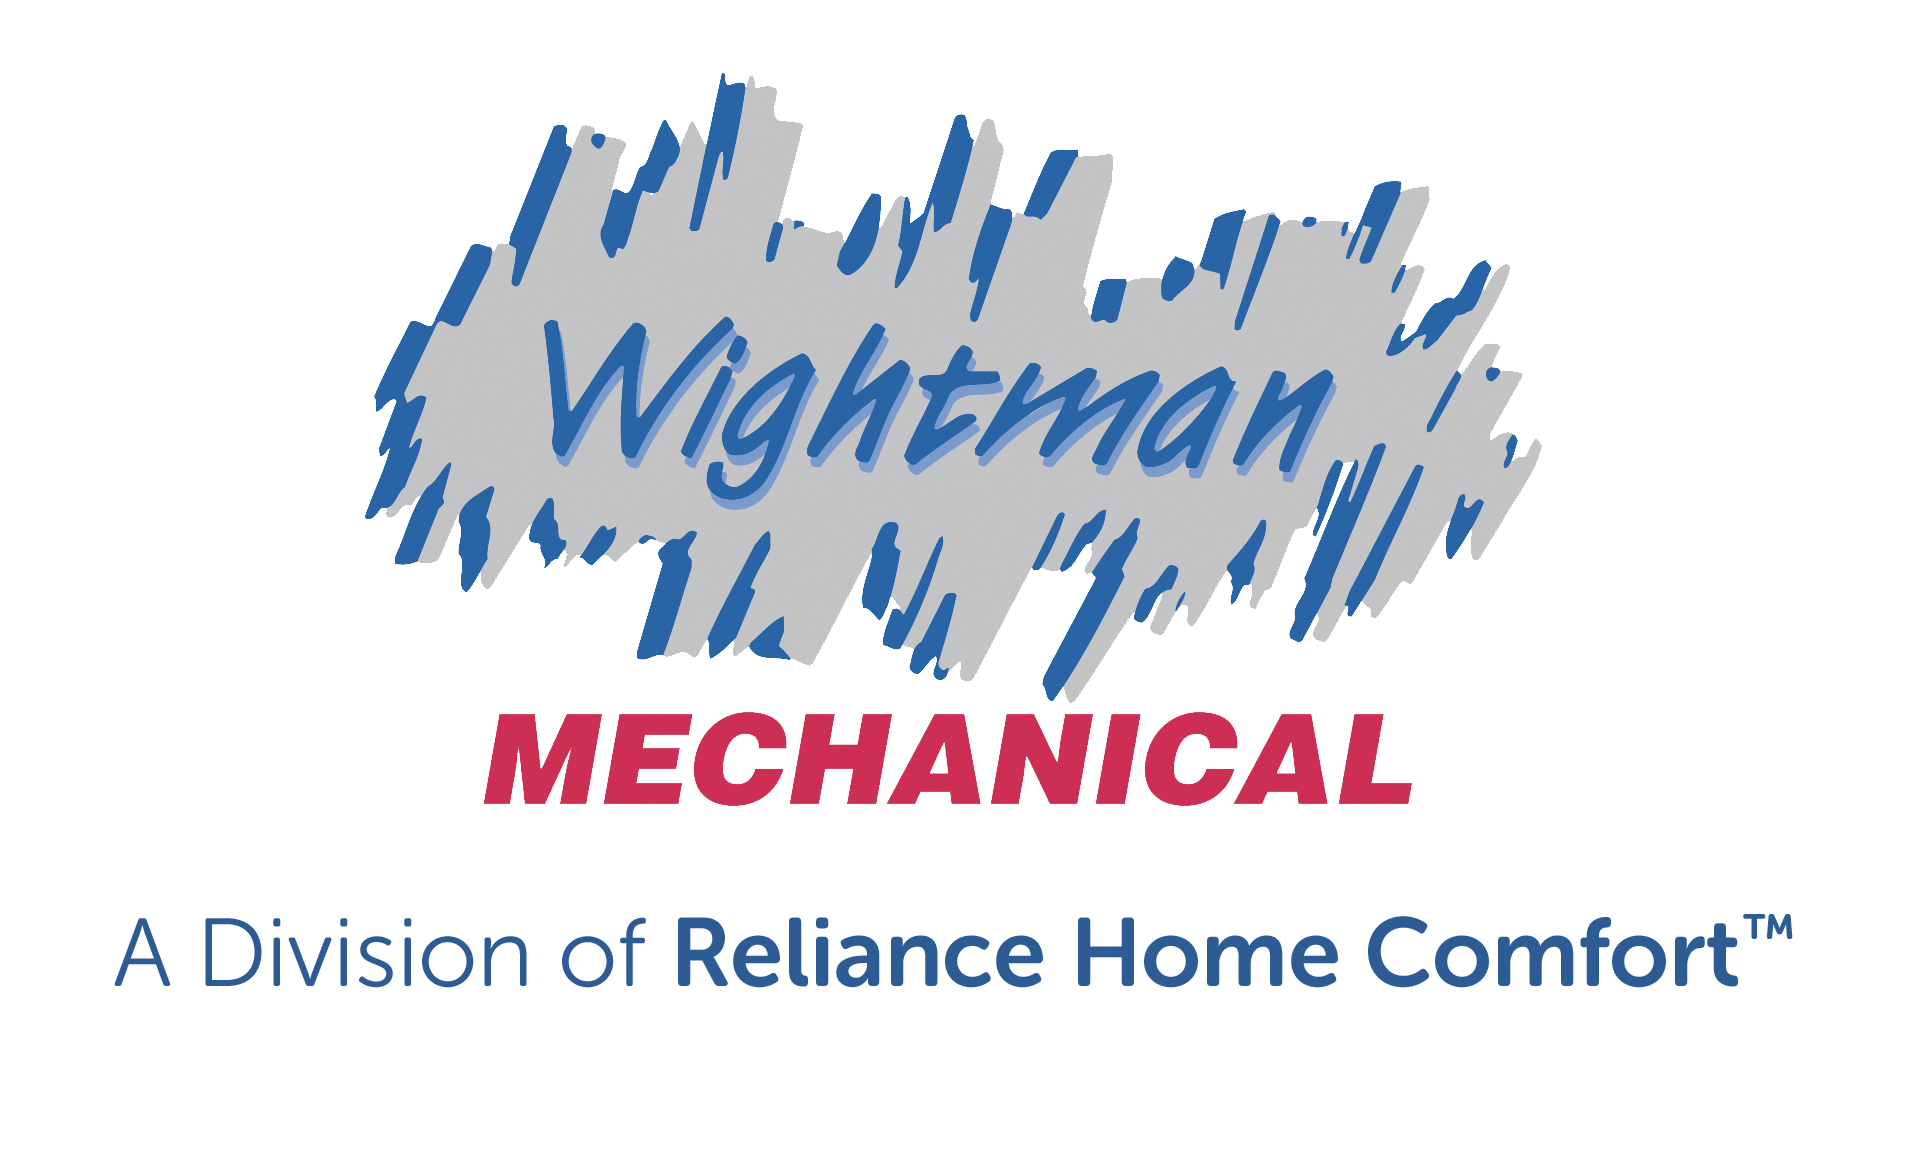 Wightman Mechanical